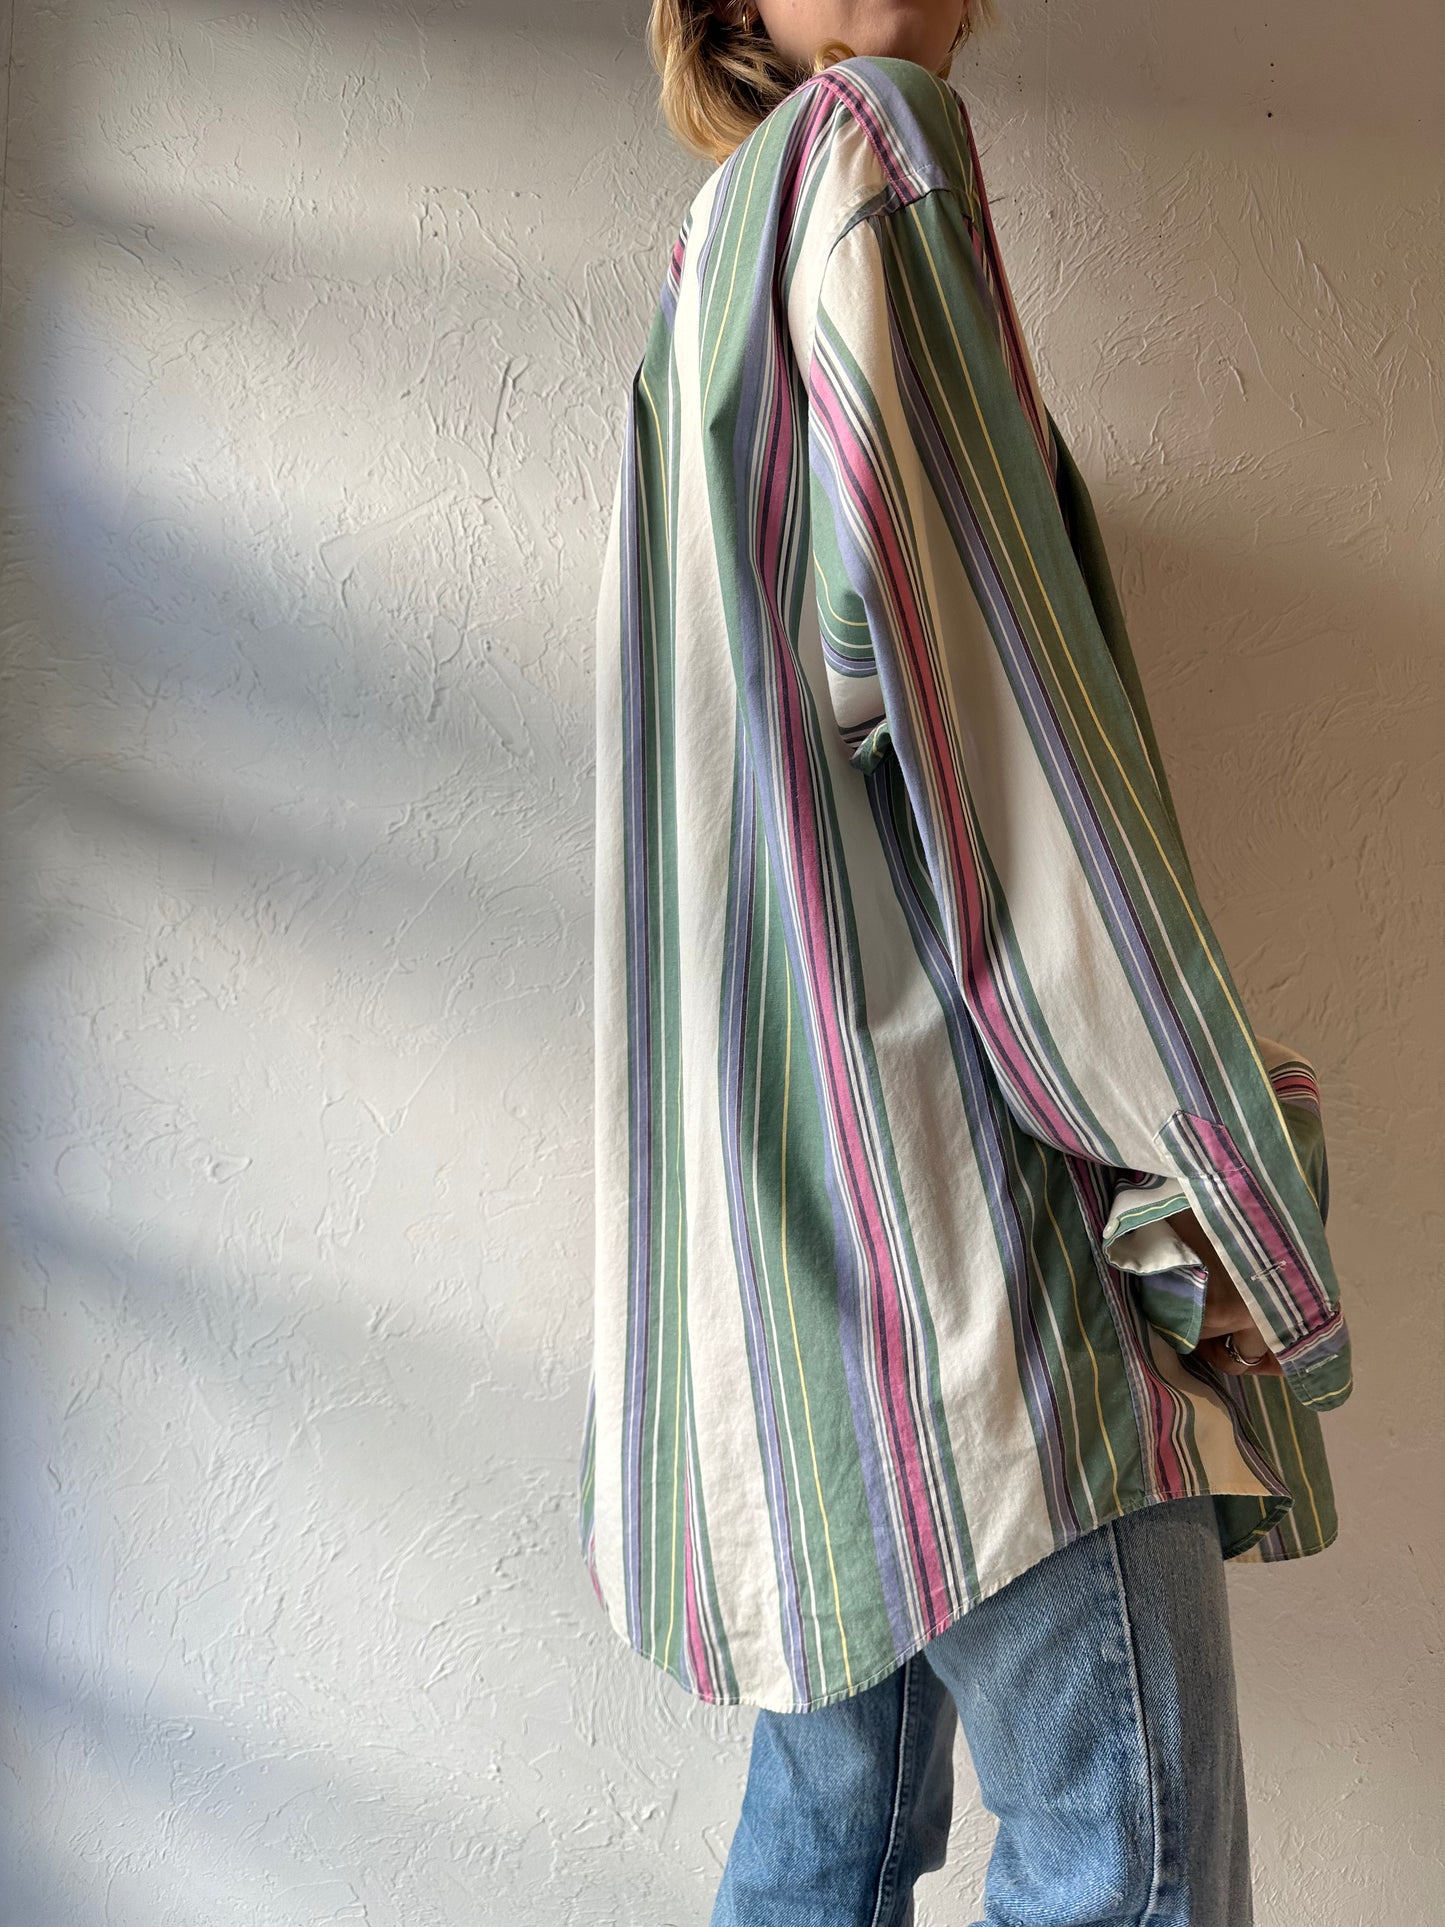 Y2k 'Ralph Lauren' Striped Button Up Shirt / XL